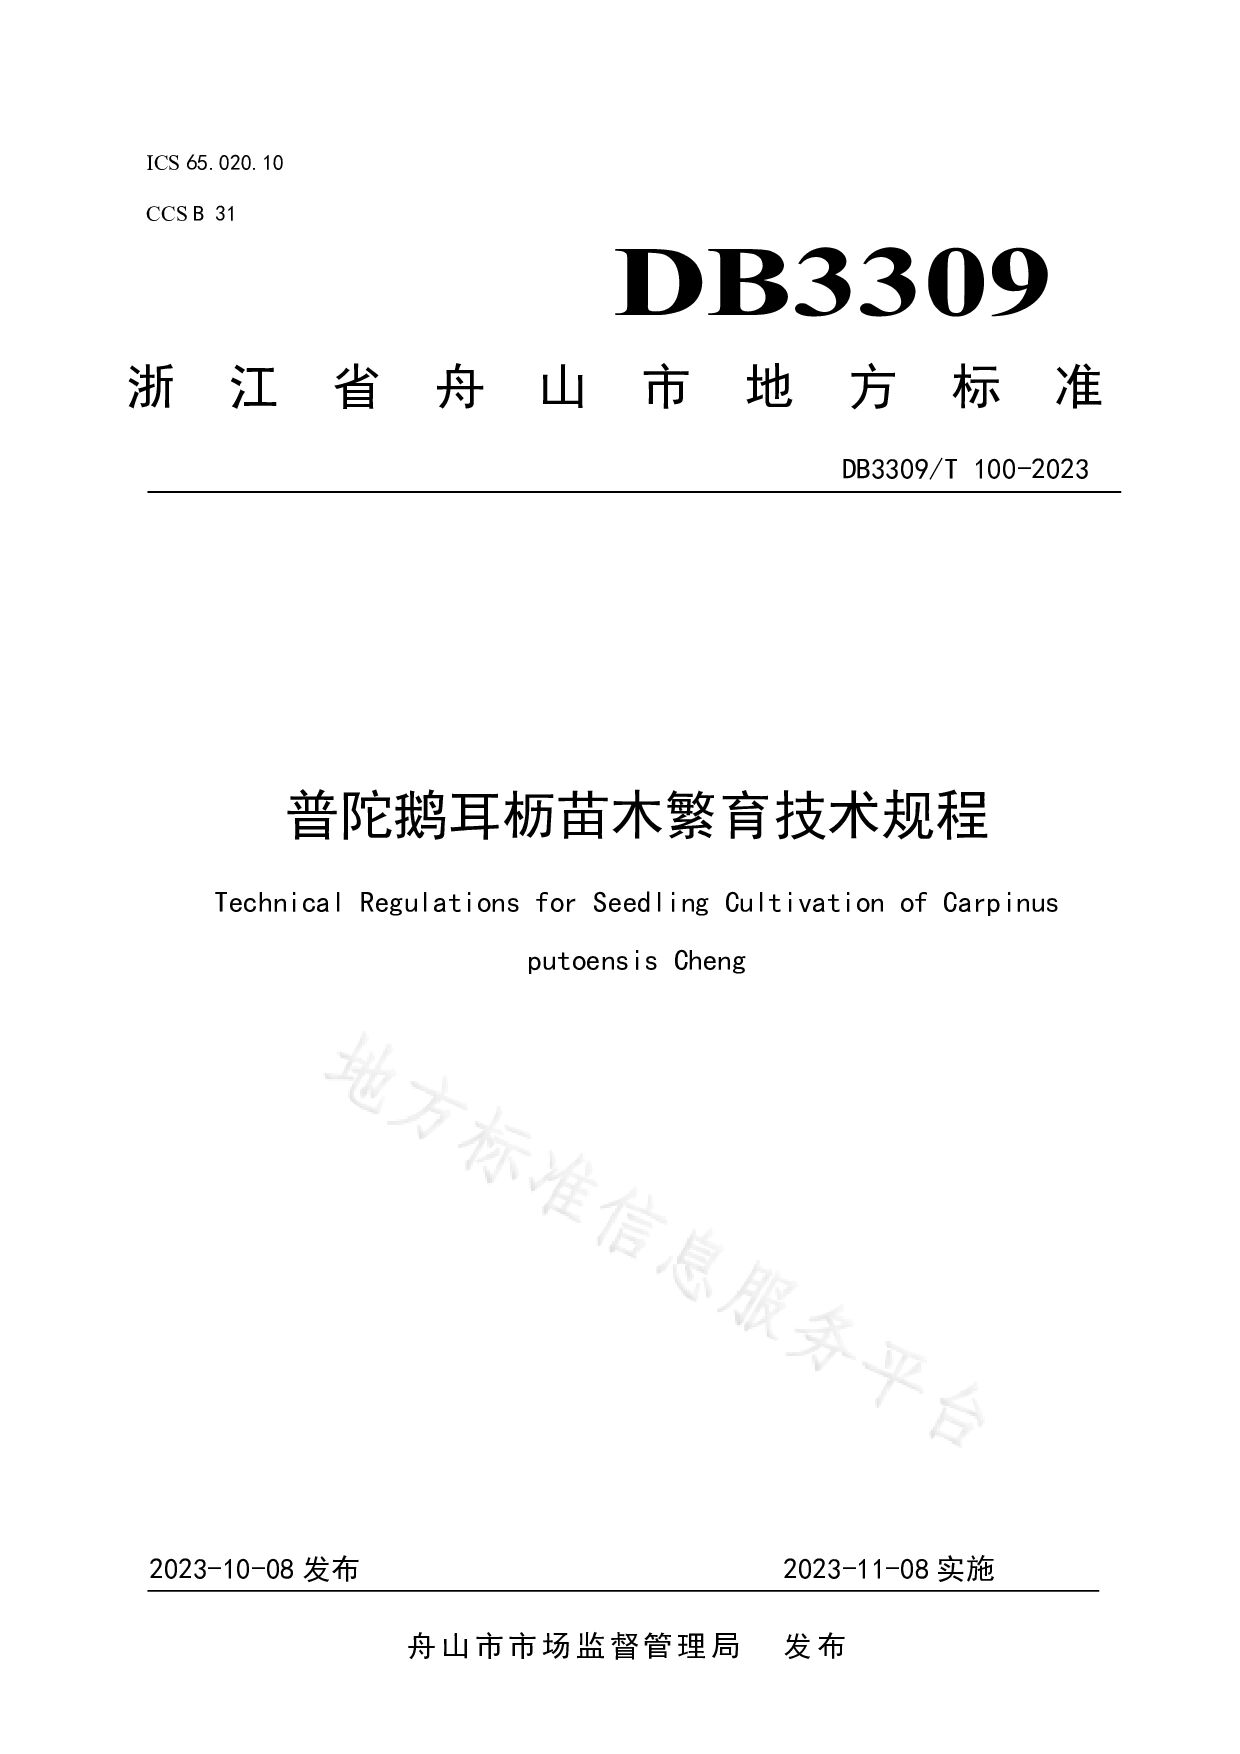 DB3309/T 100-2023